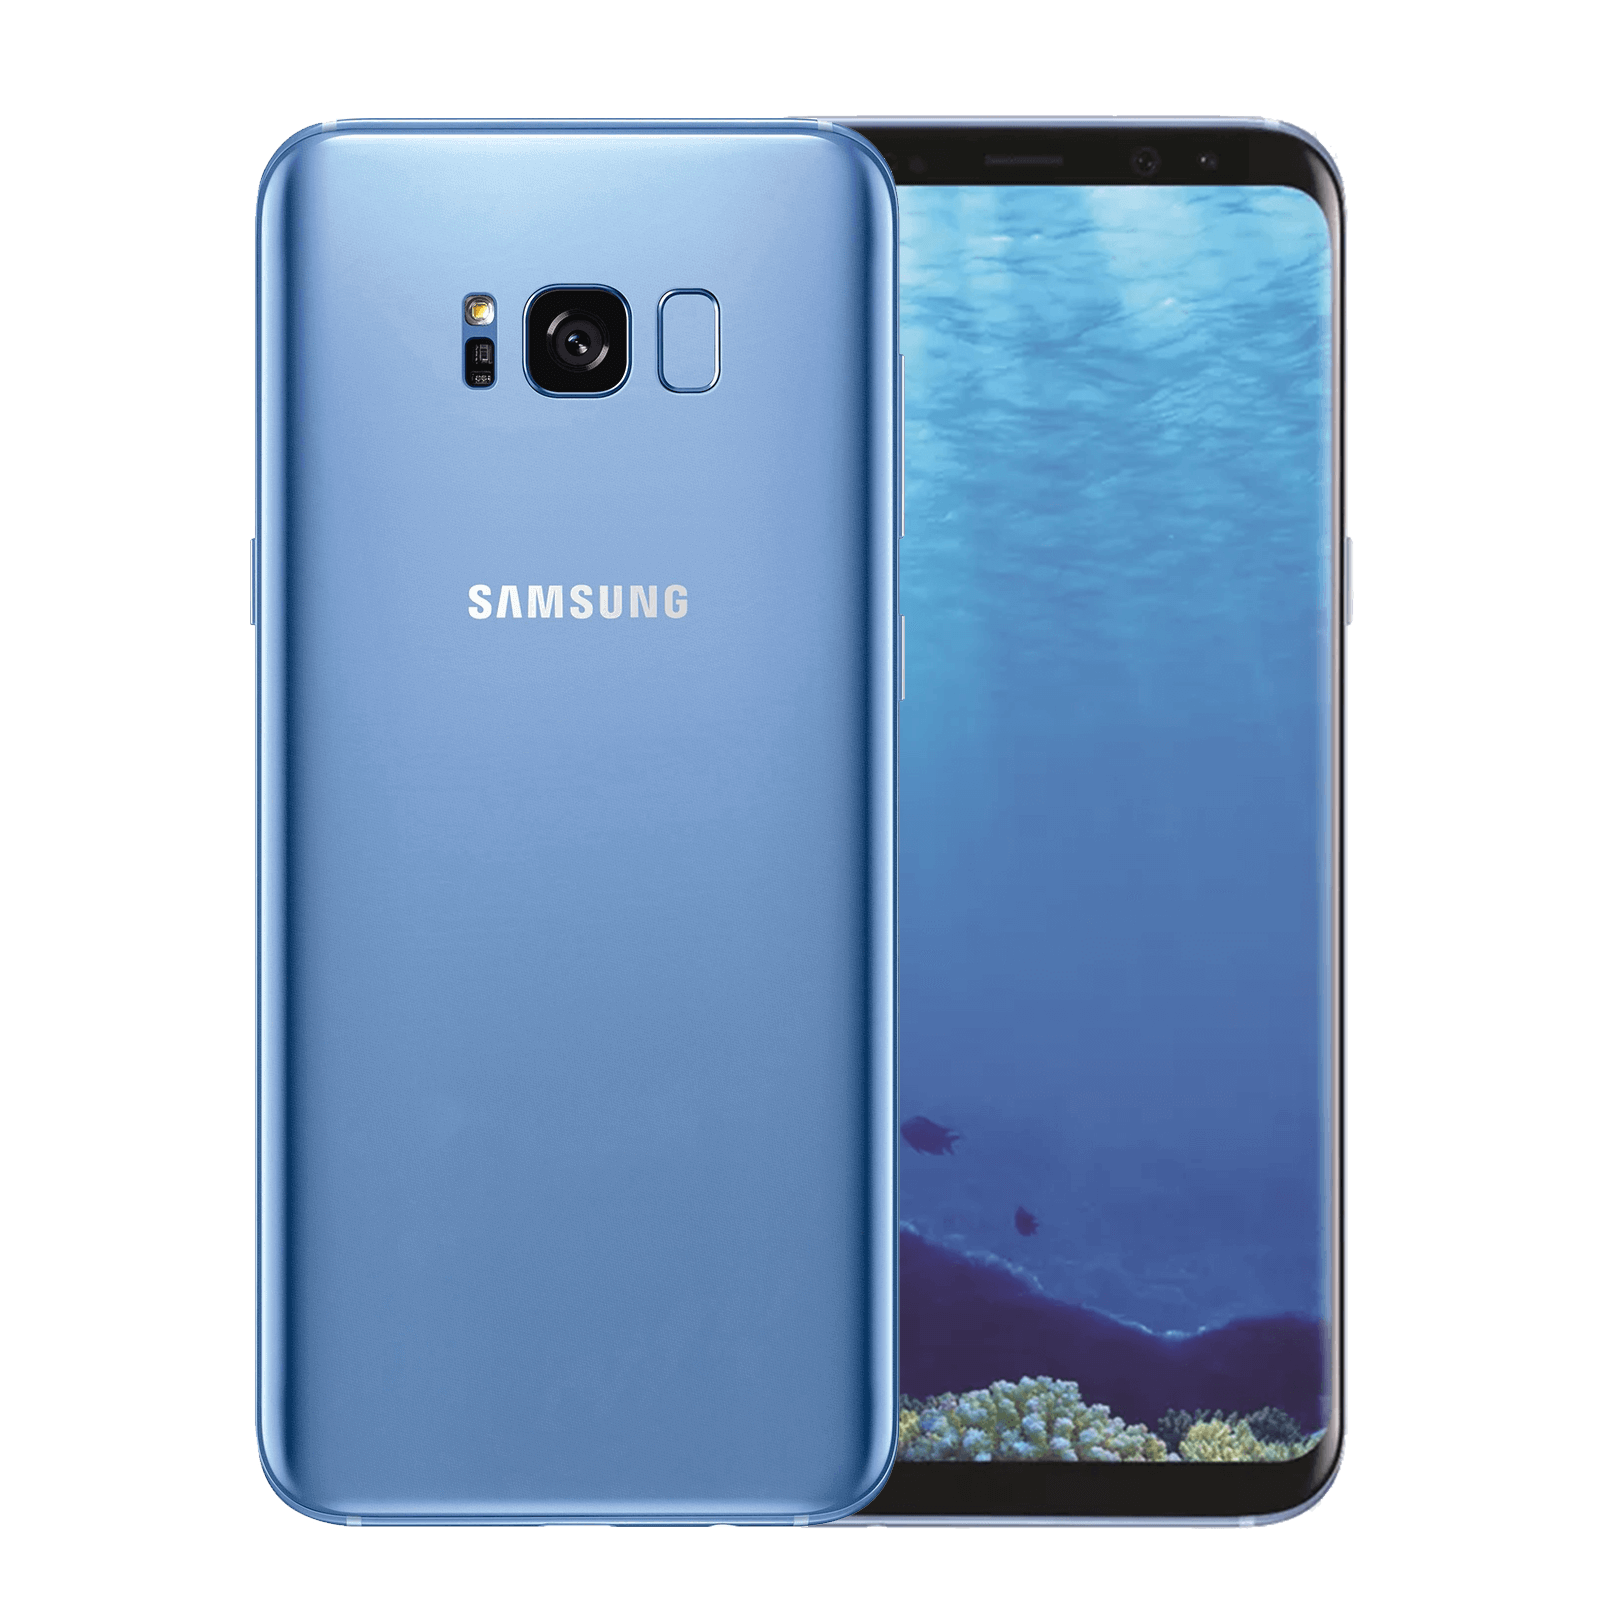 Samsung Galaxy S8 64GB Blue G950F Fair - Unlocked 64GB Blue Fair